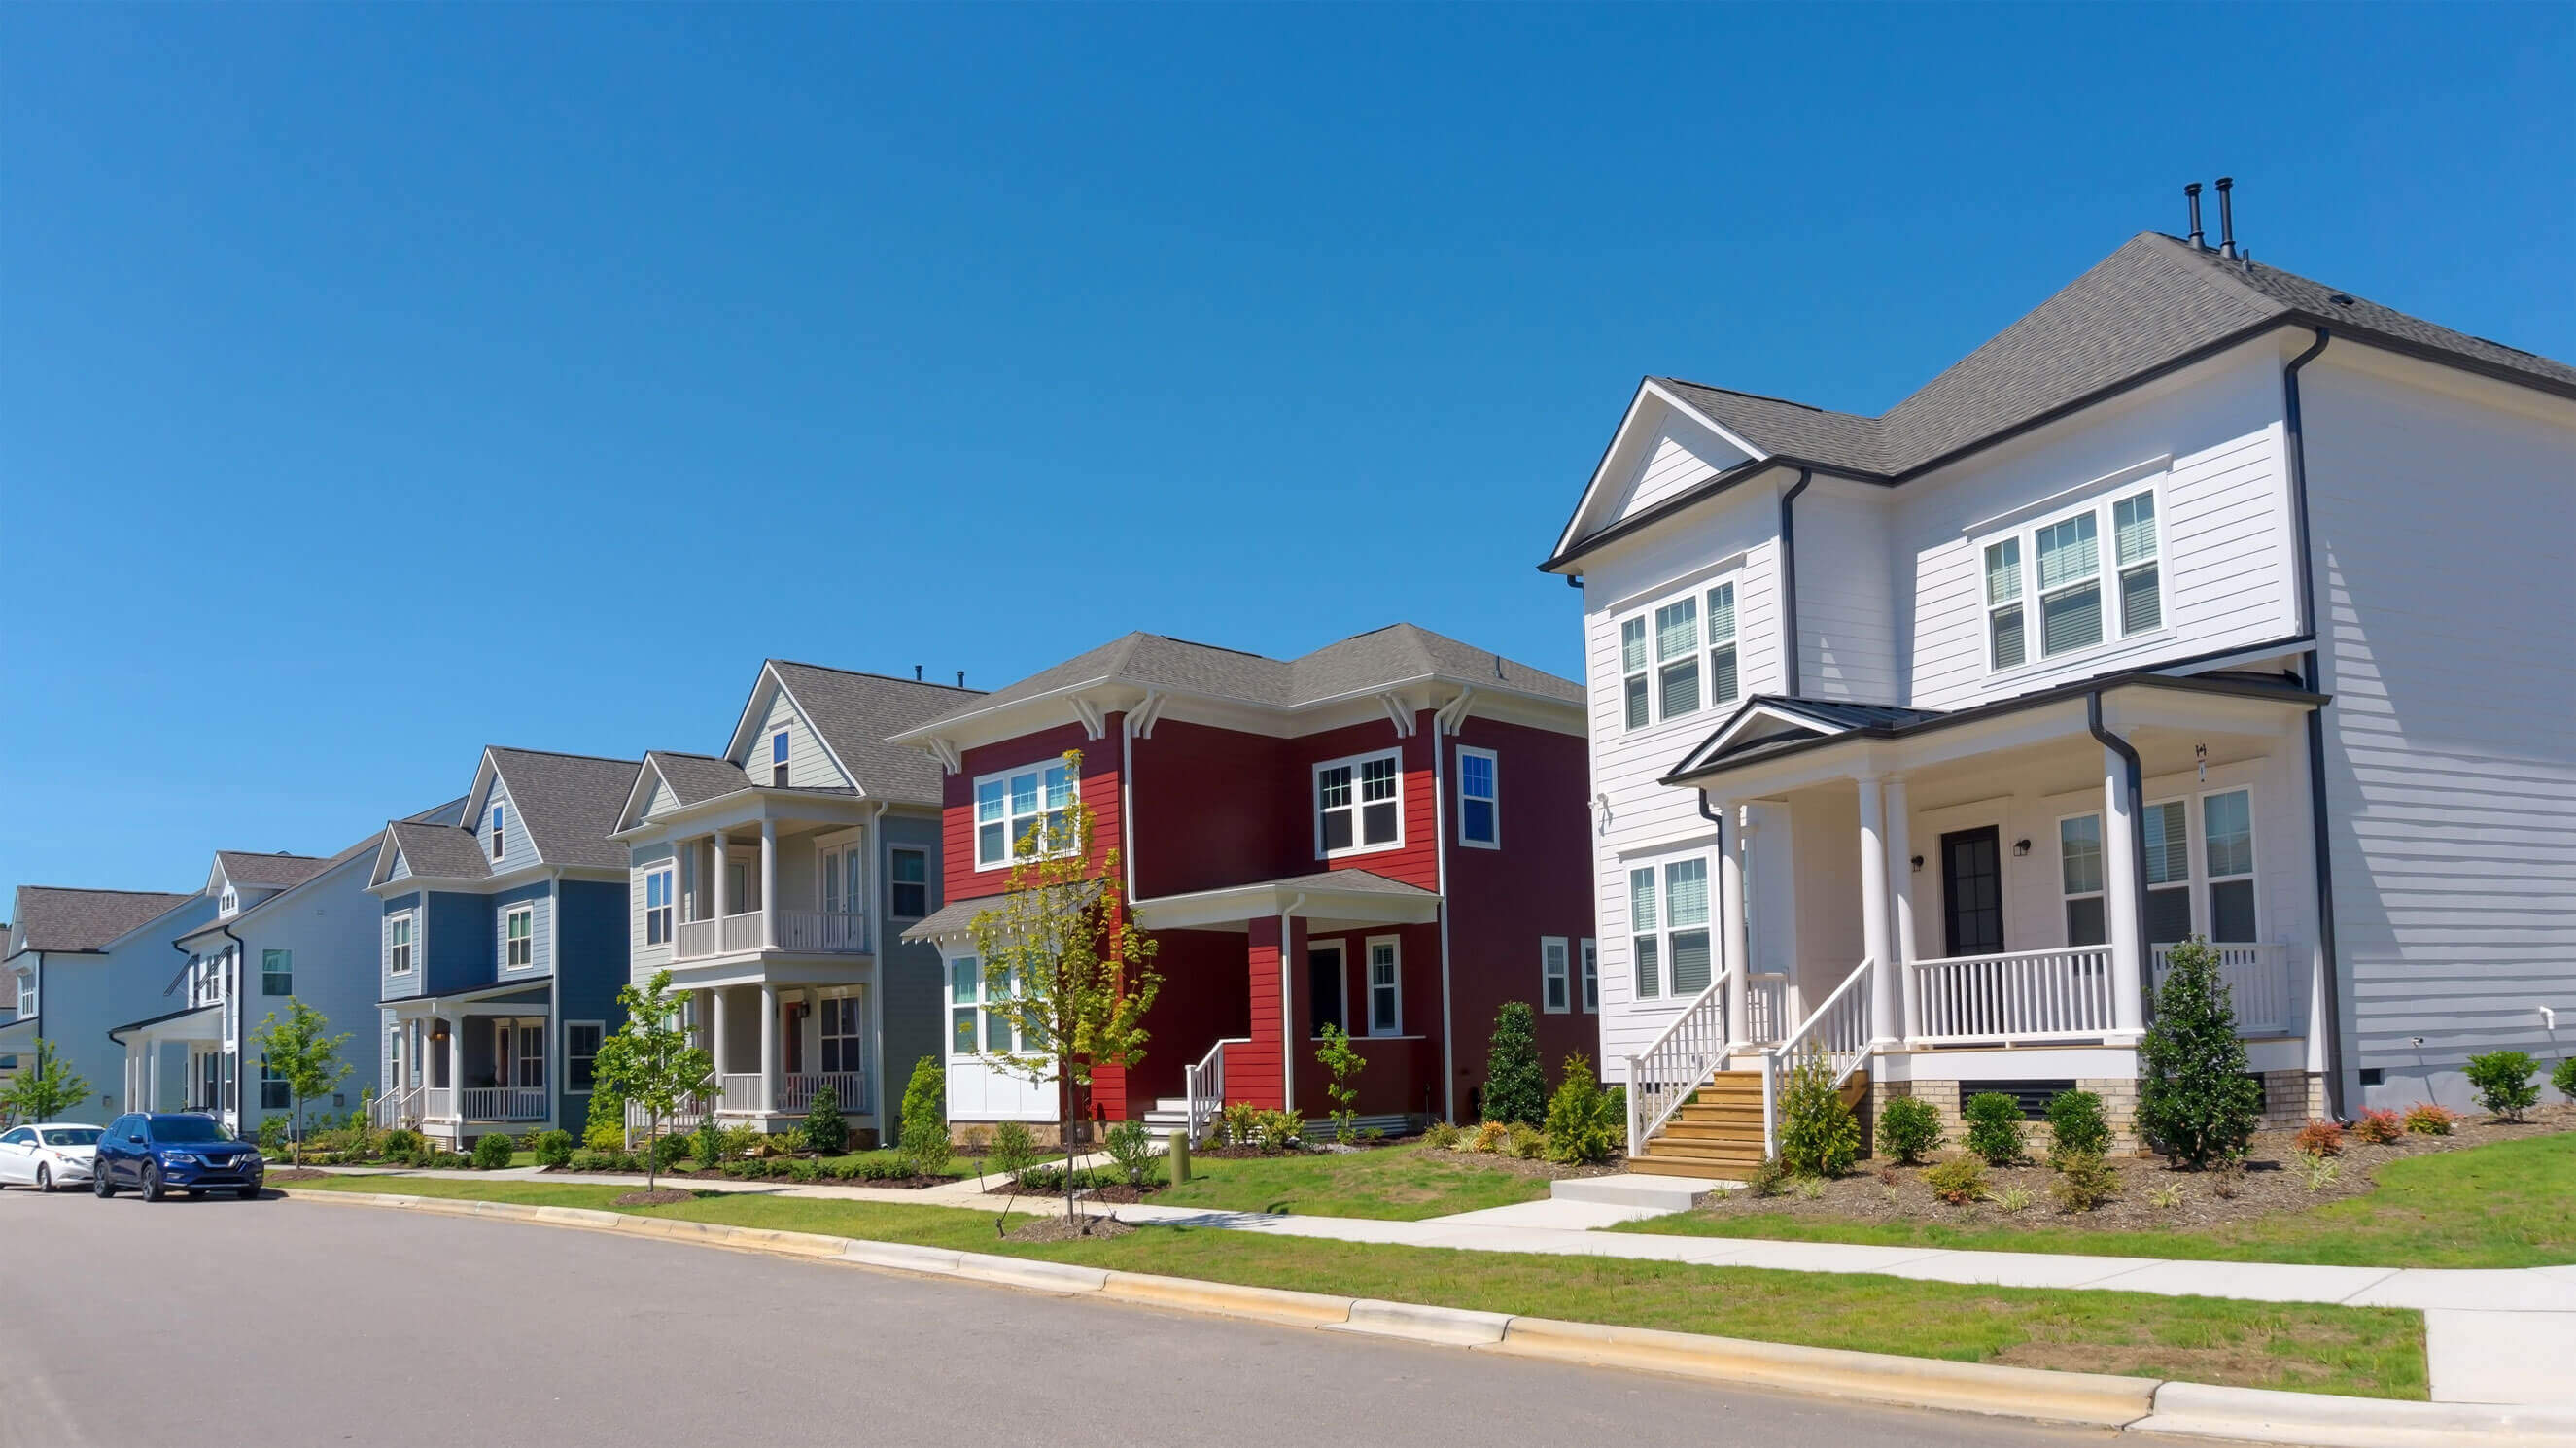 Row of homes on a suburban street